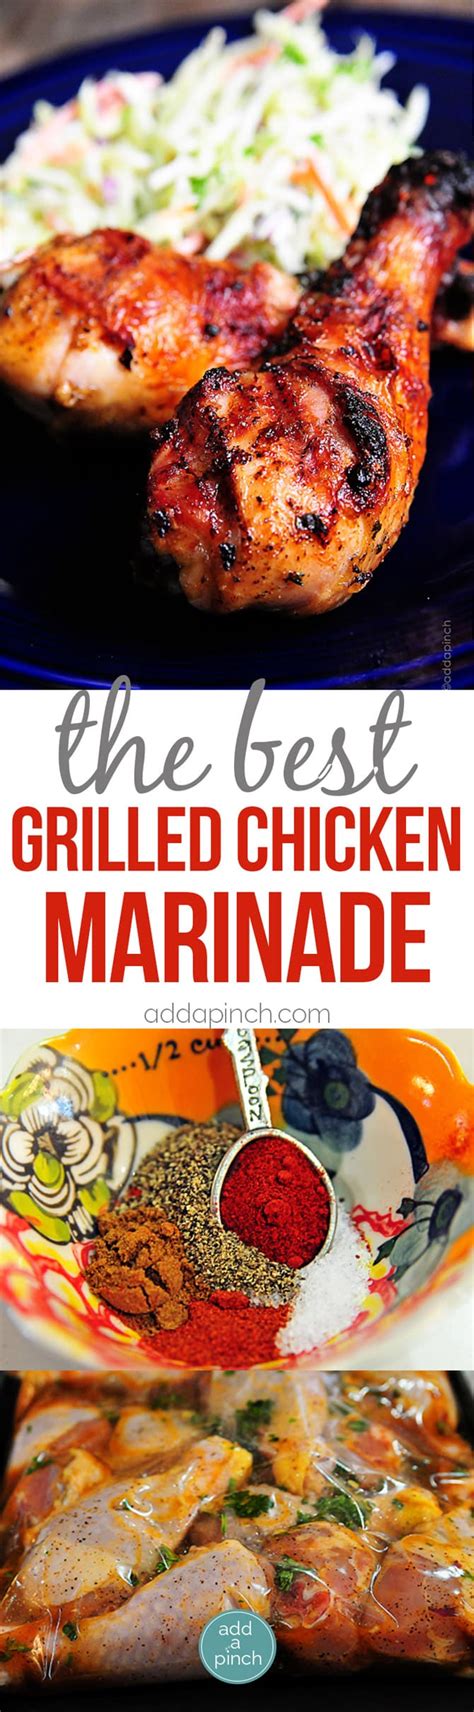 The Best Grilled Chicken Marinade Recipe Add A Pinch